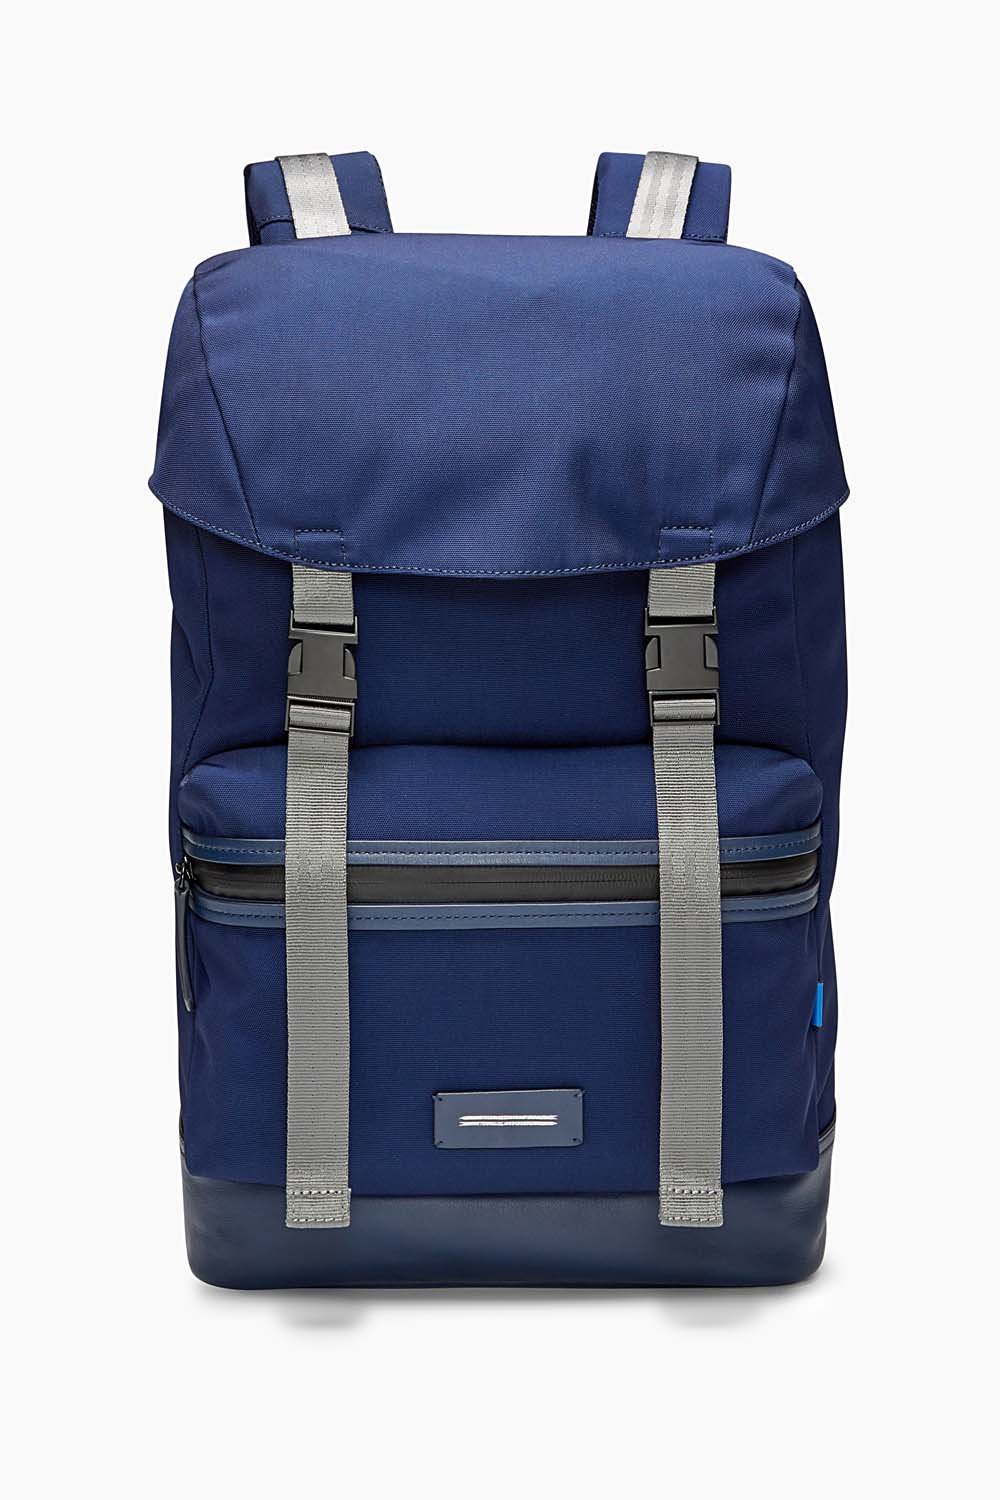 Collosseum Backpack